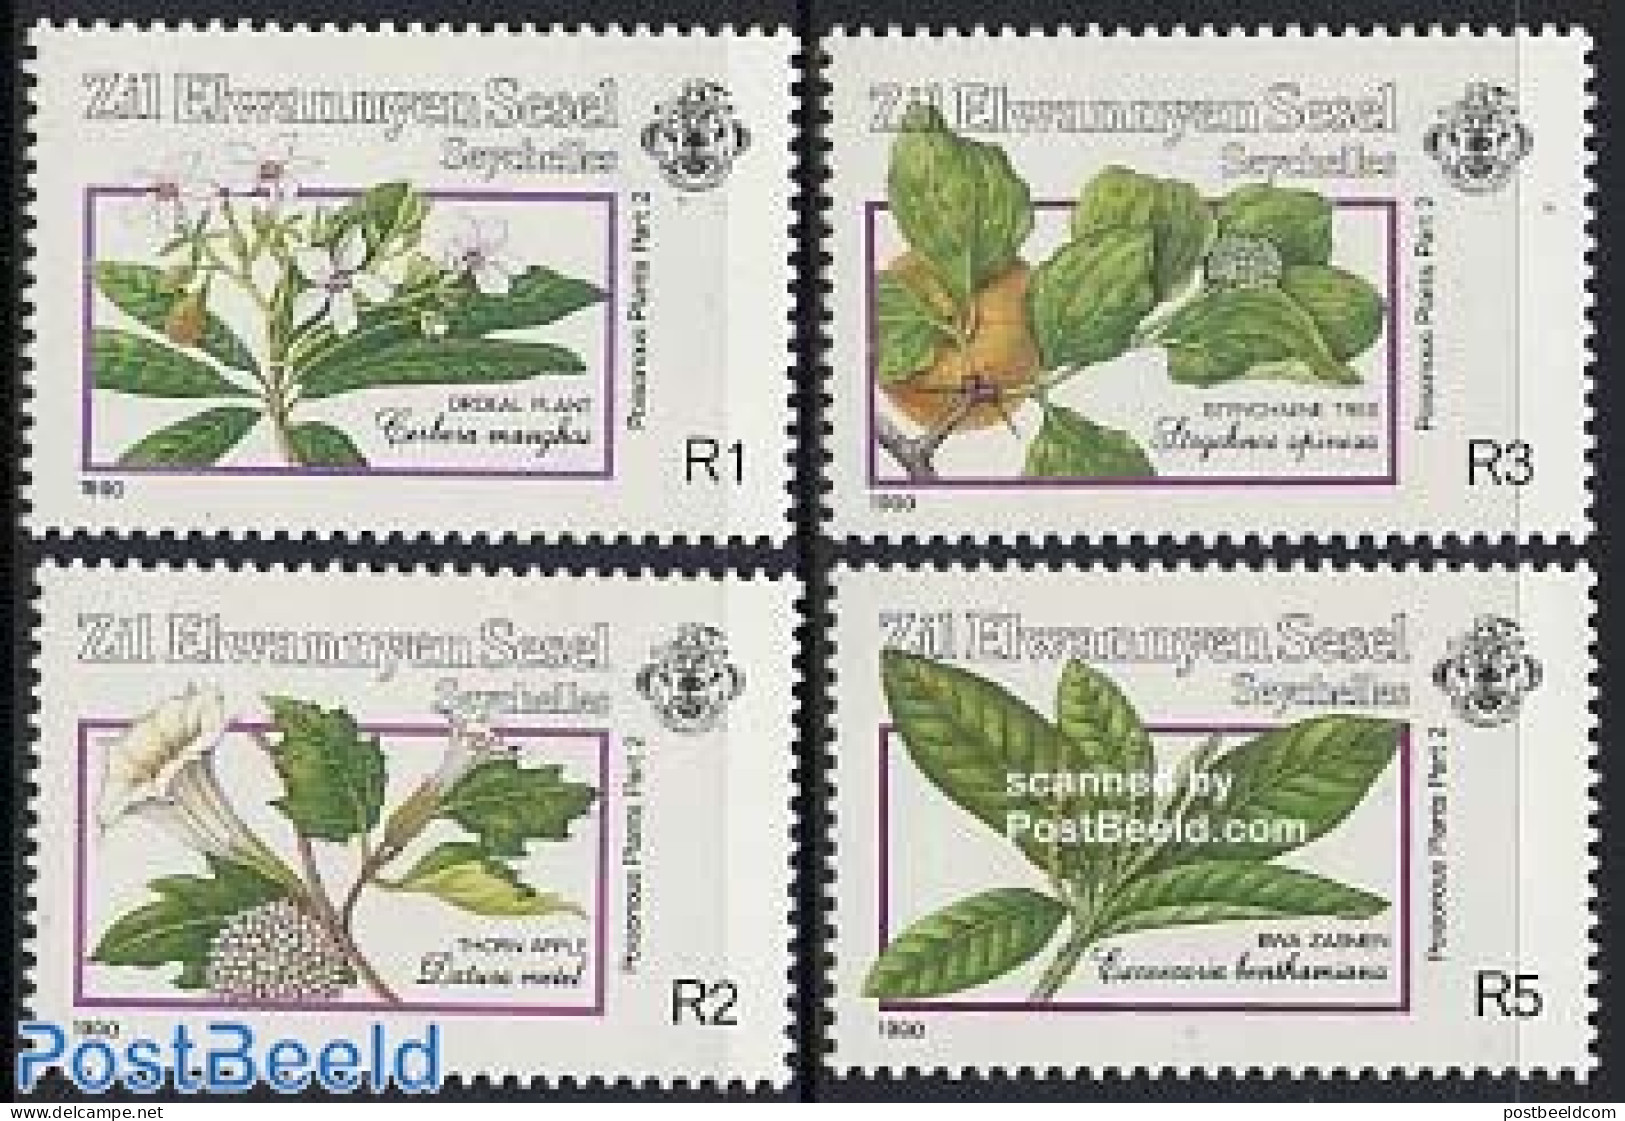 Seychelles, Zil Eloigne Sesel 1990 Poisened Plants 4v, Mint NH, Nature - Flowers & Plants - Seychelles (1976-...)